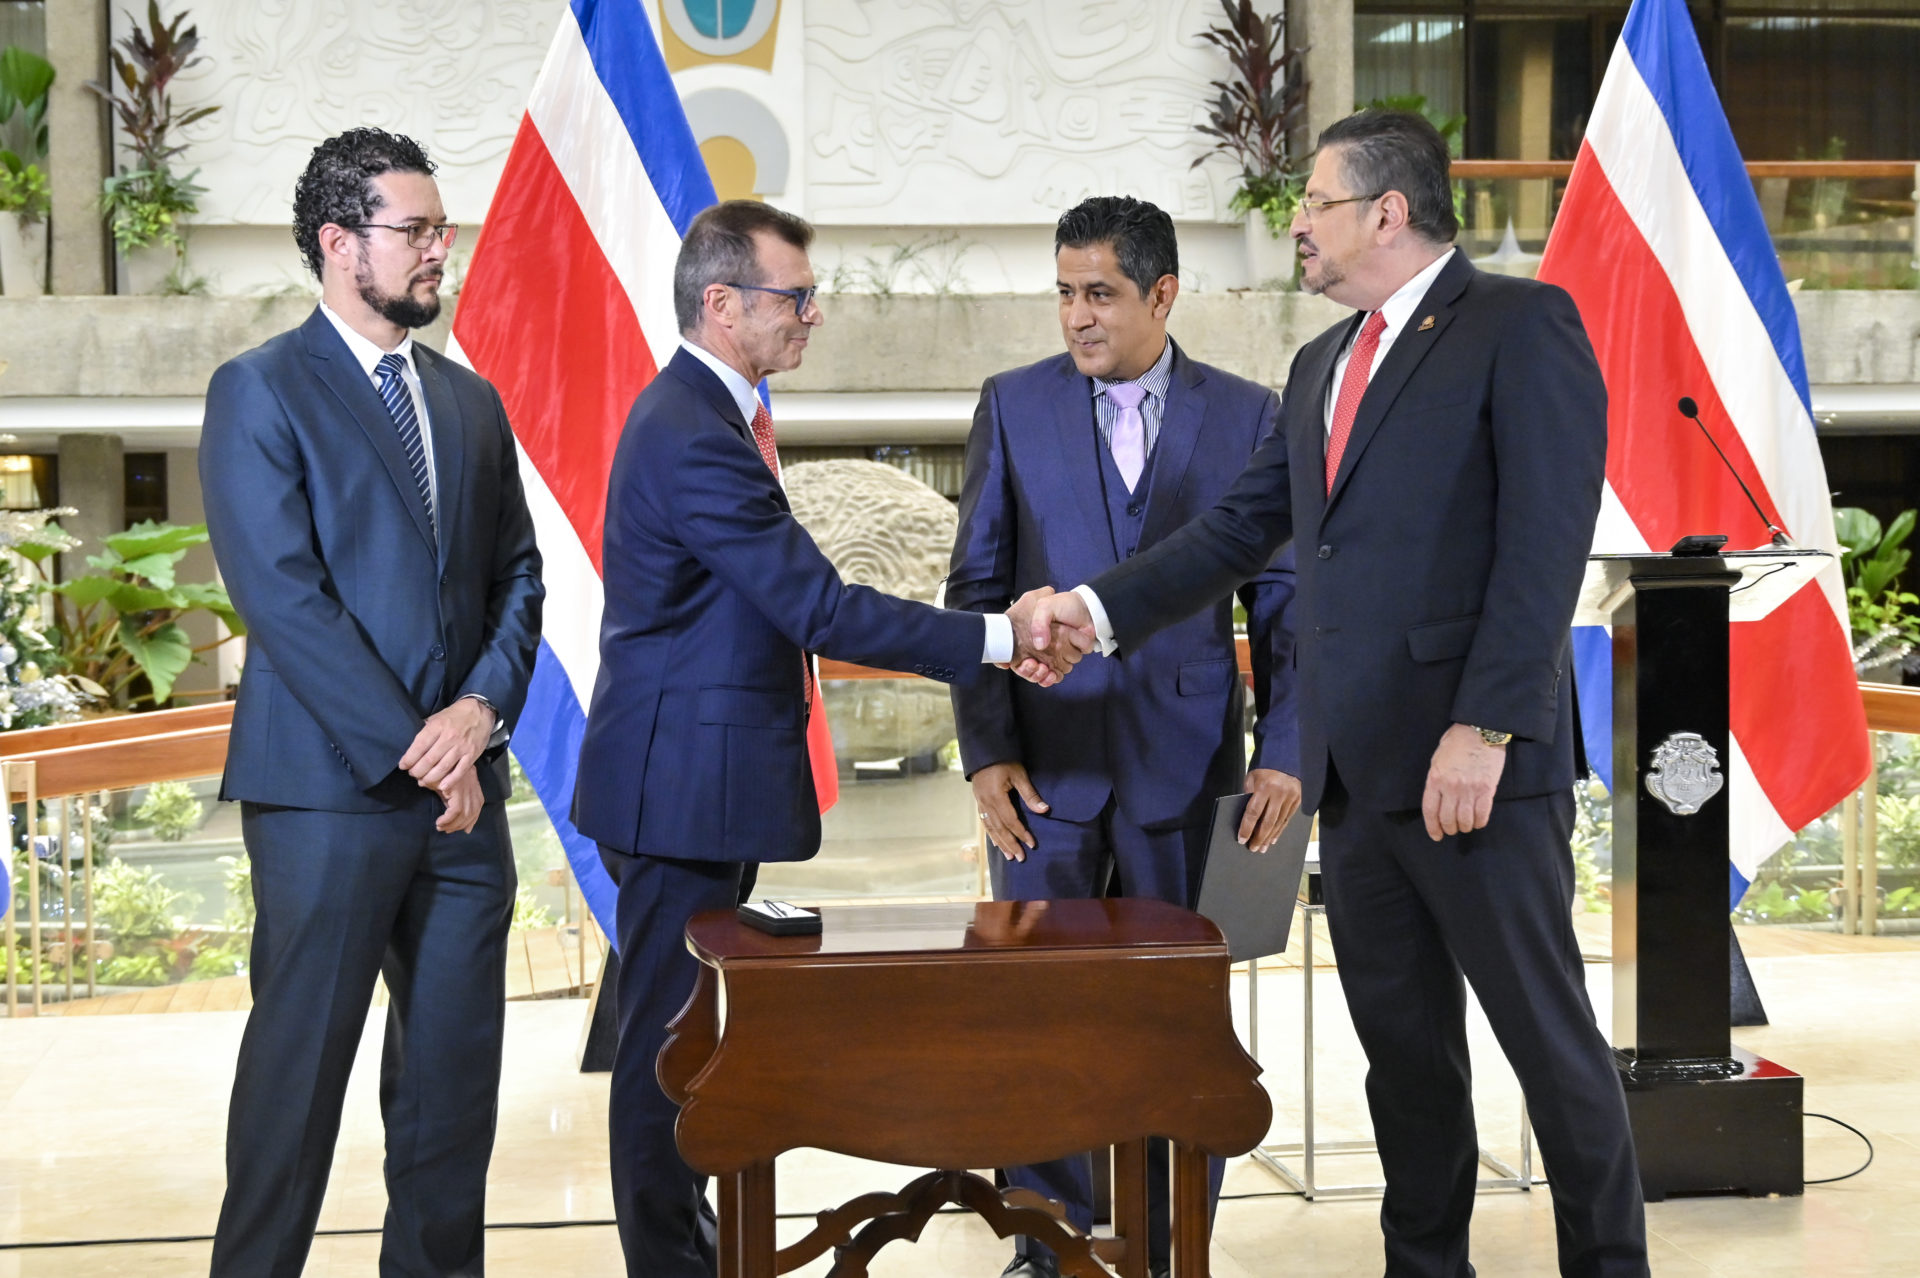 FreeBalance President and CEO, Manuel Schiappa Pietra, shakes hands with President of Costa Rica, Rodrigo Chaves Robles